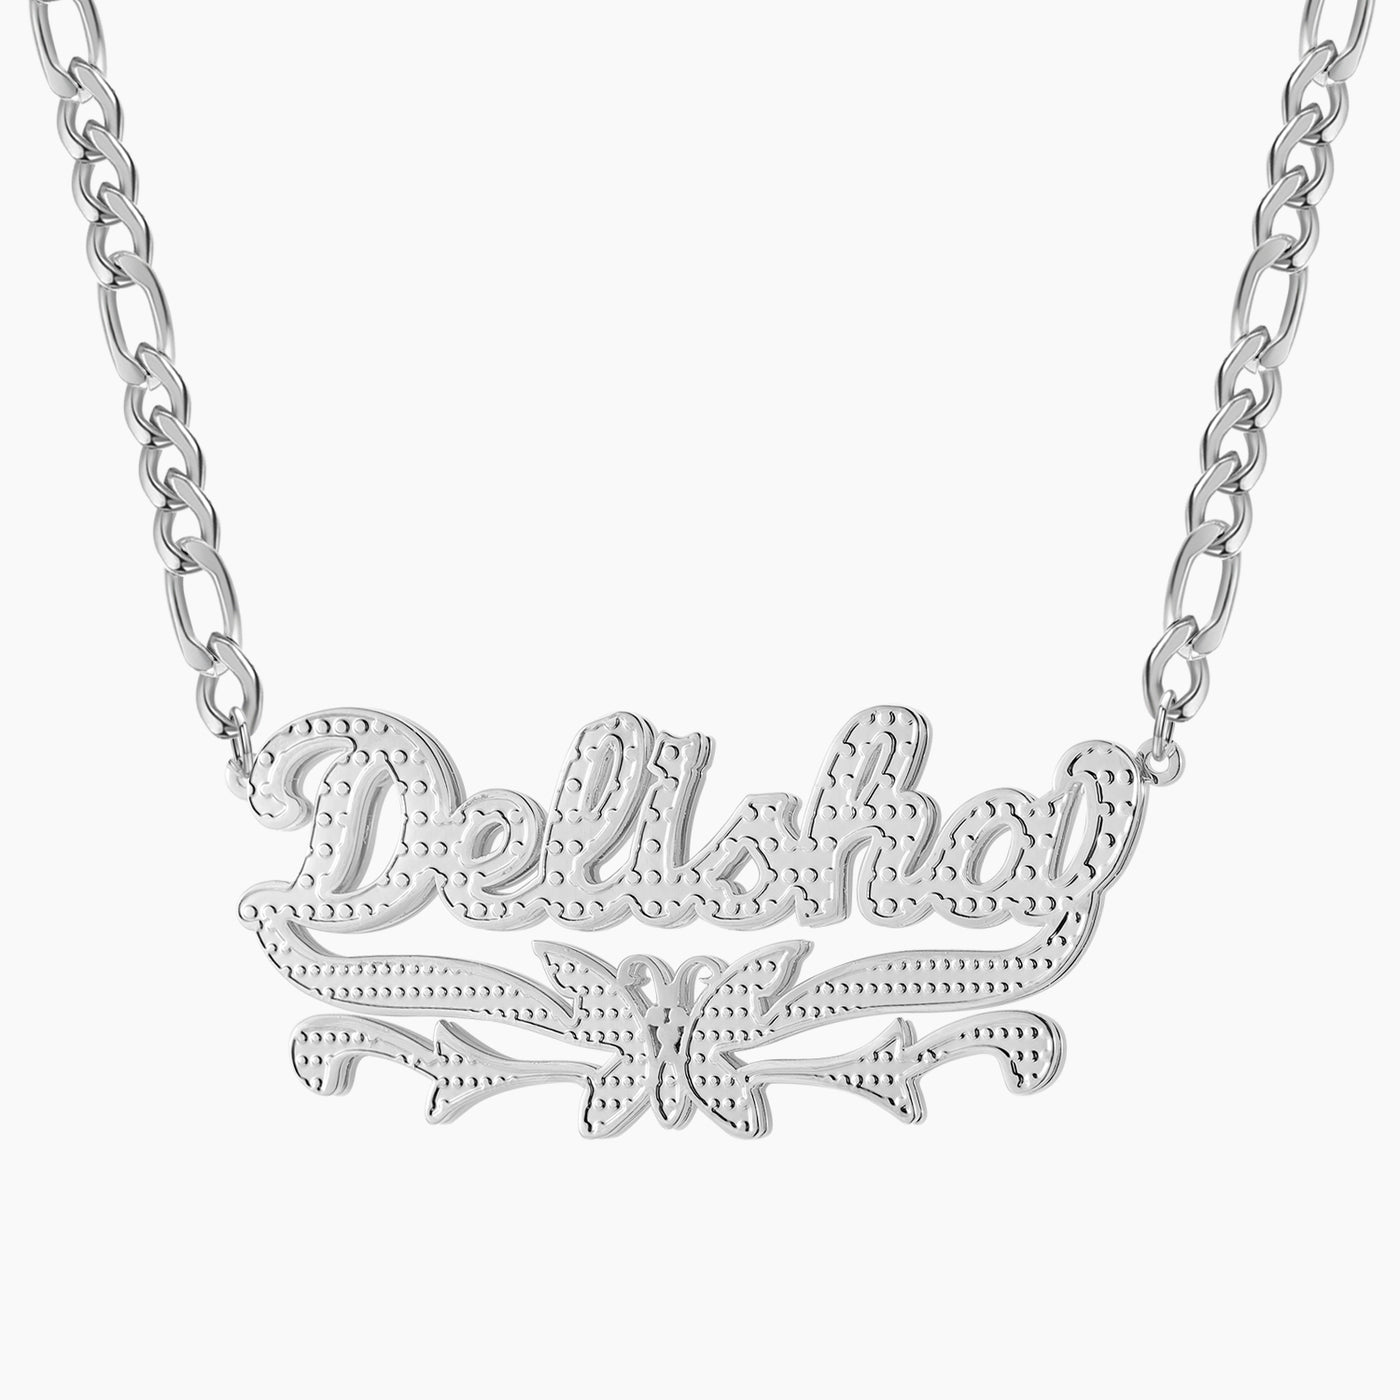 The Delisha Necklace